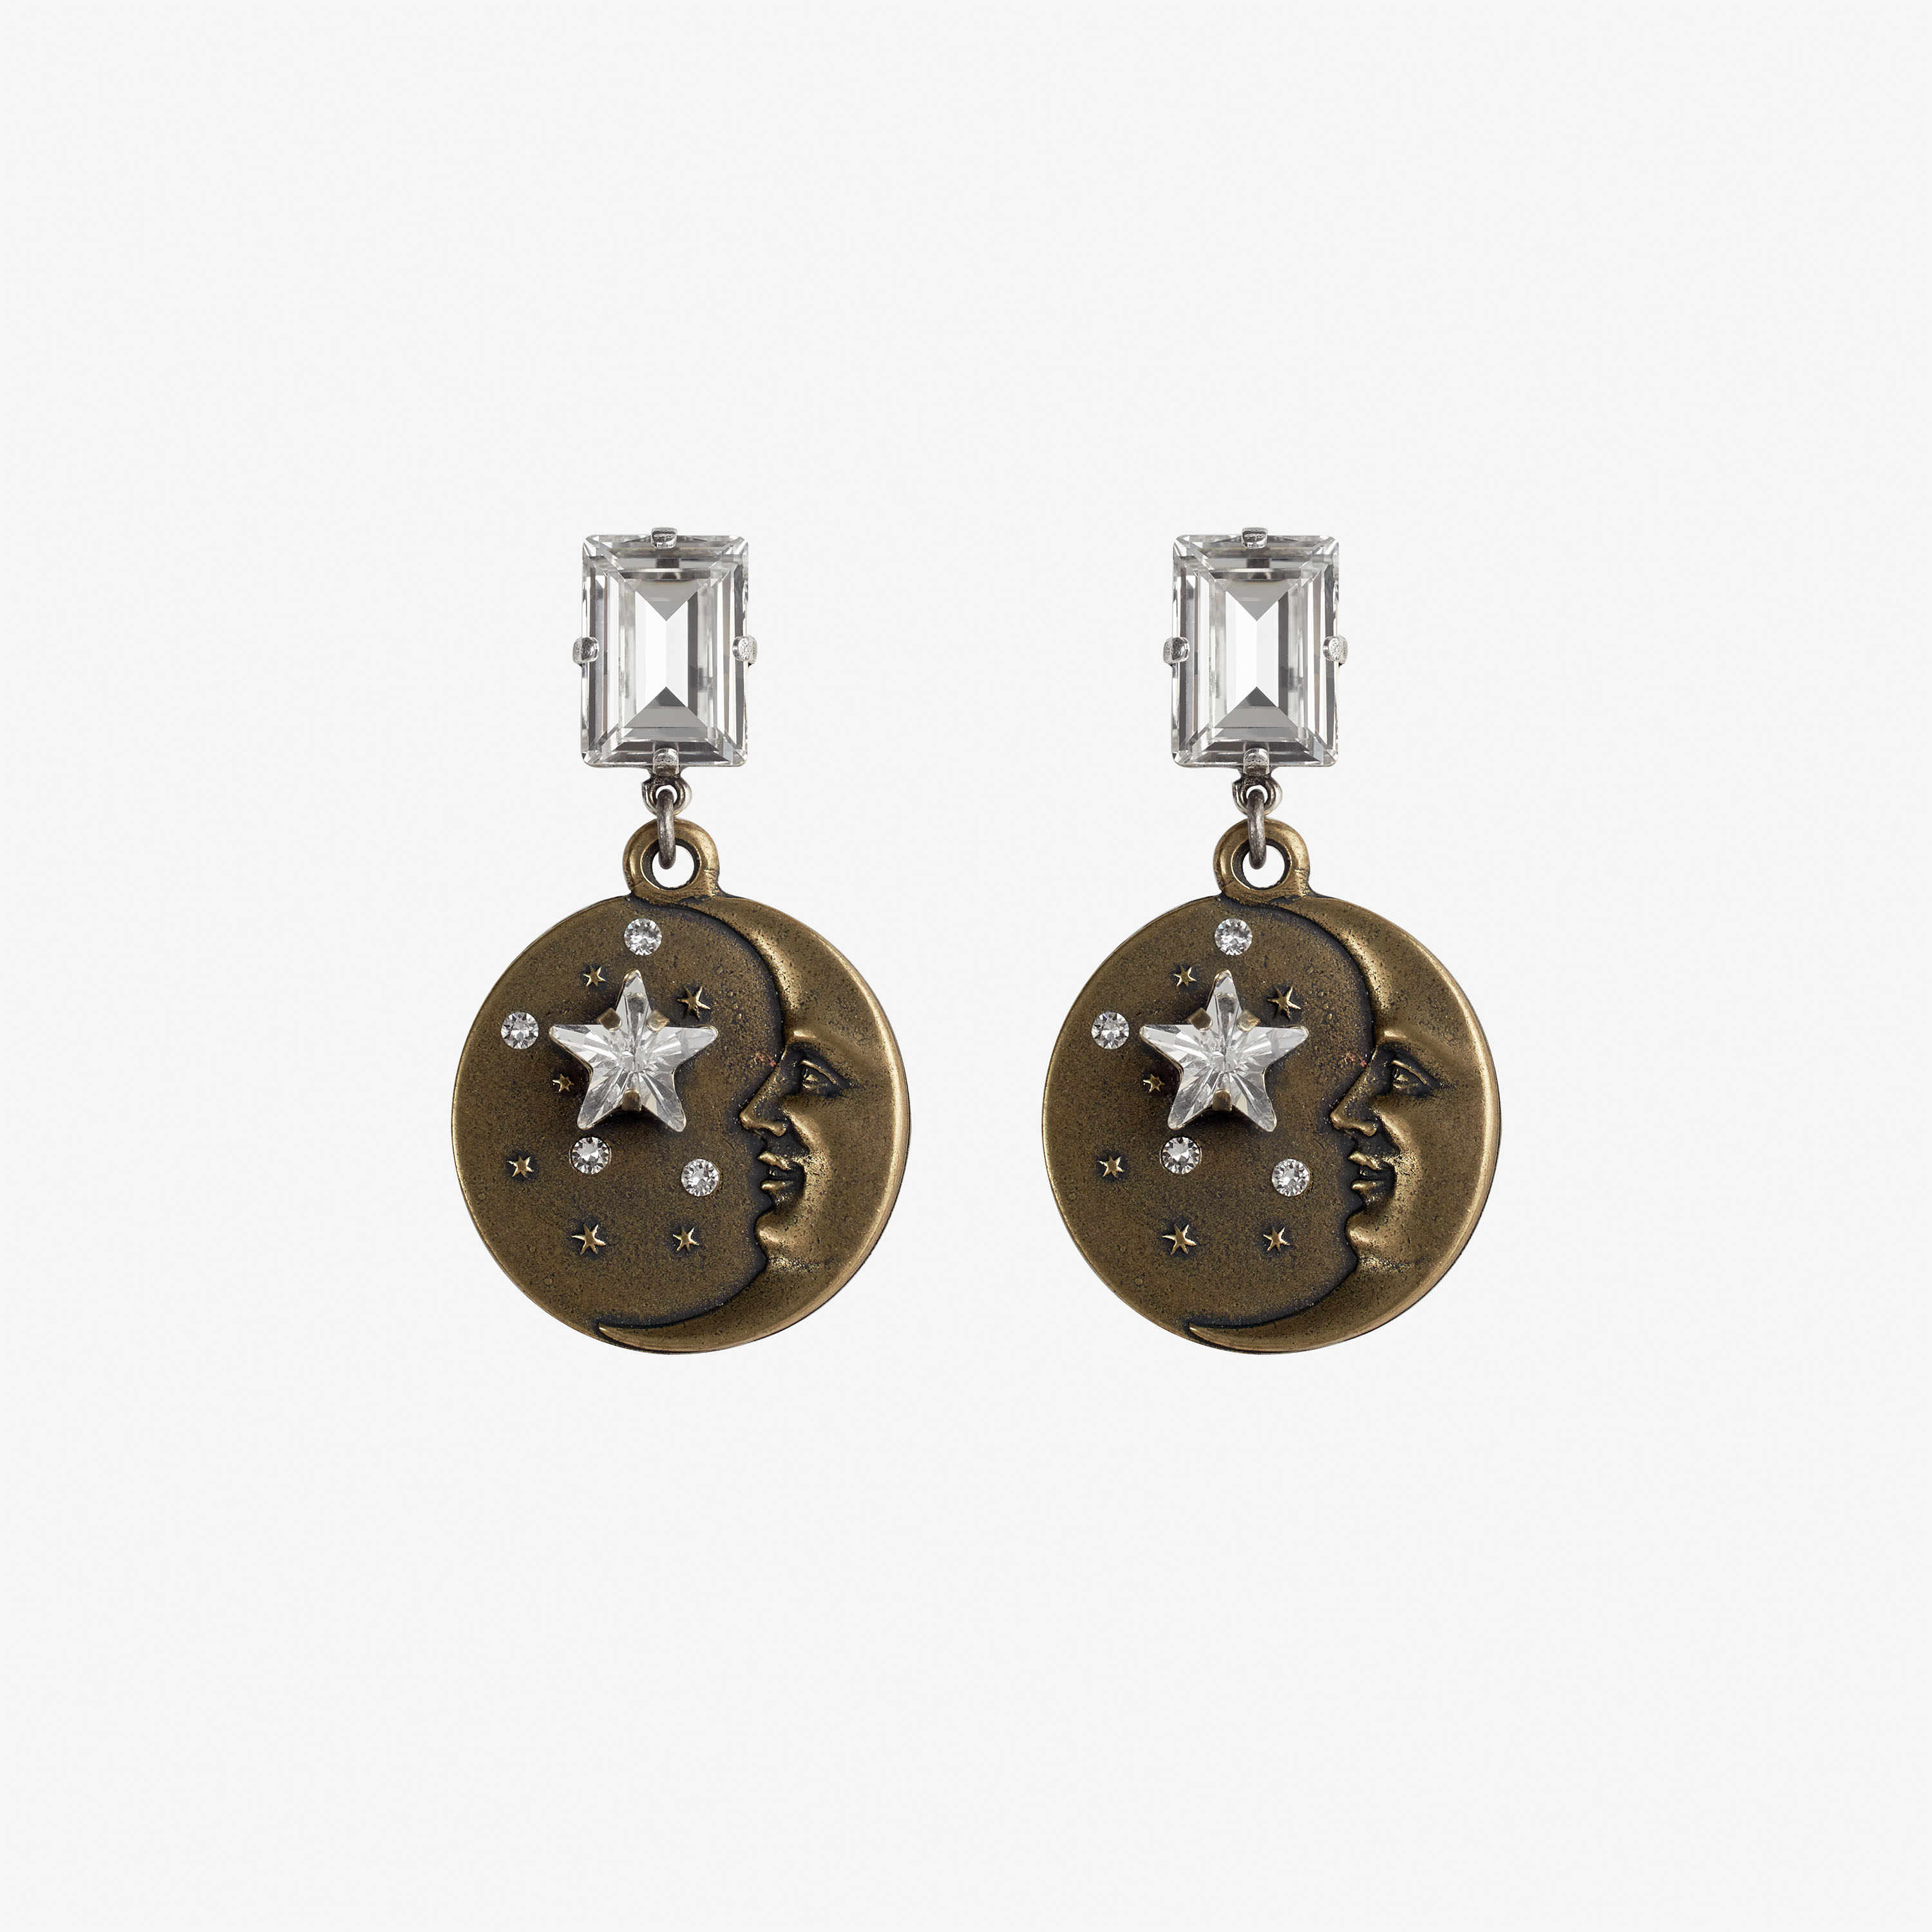 Laimushka fashion jewelry earrings with swarovski crystals